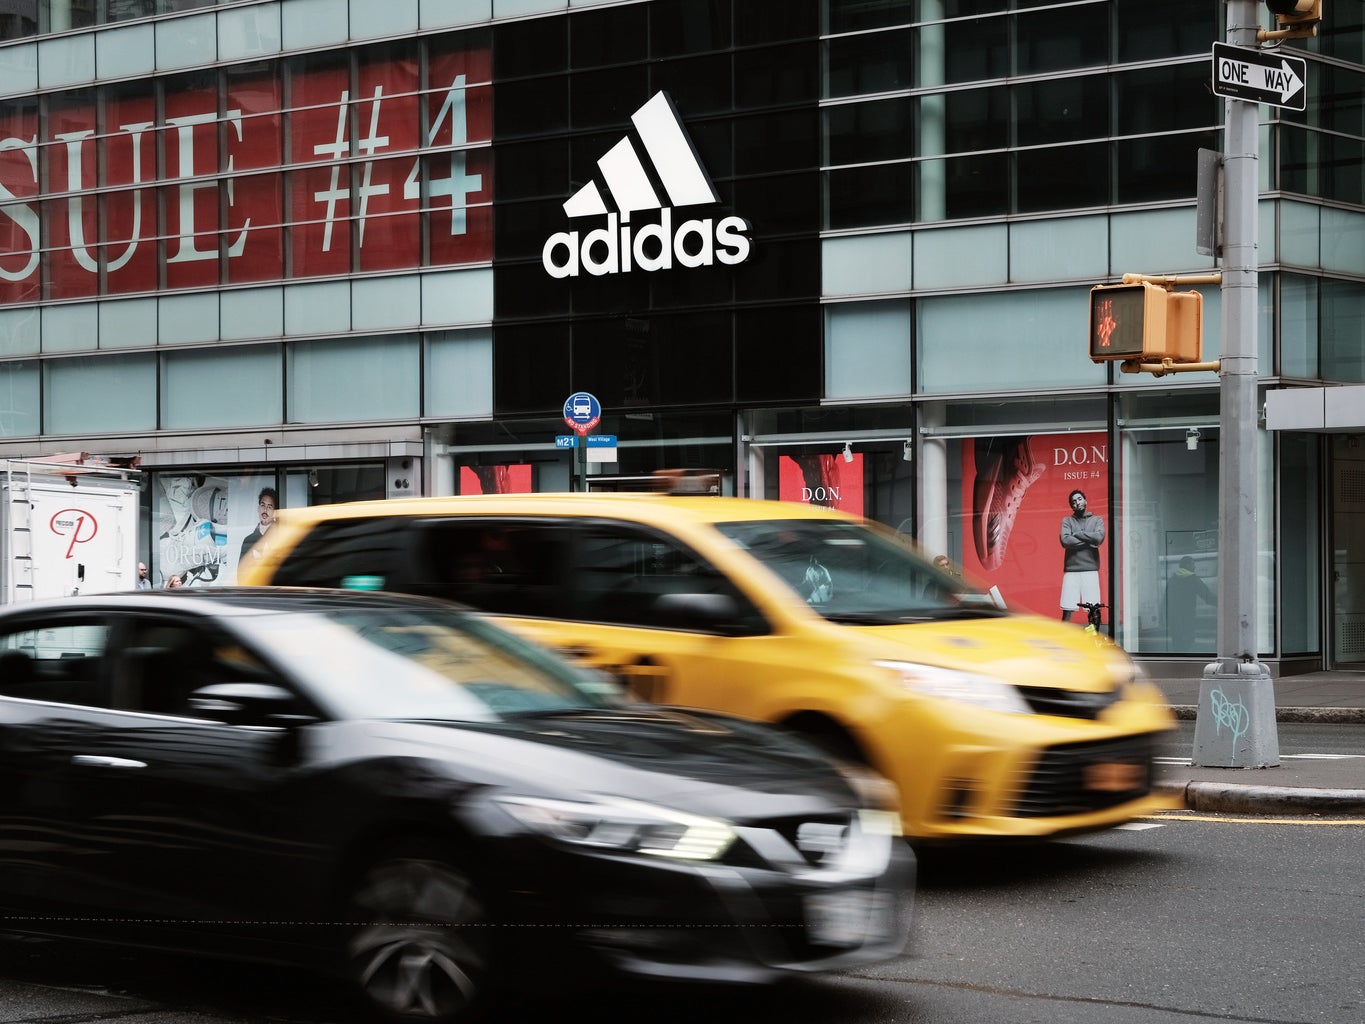 Adidas stock tanks as Yeezy inventory sales, profits (OTCMKTS:ADDDF) Seeking Alpha